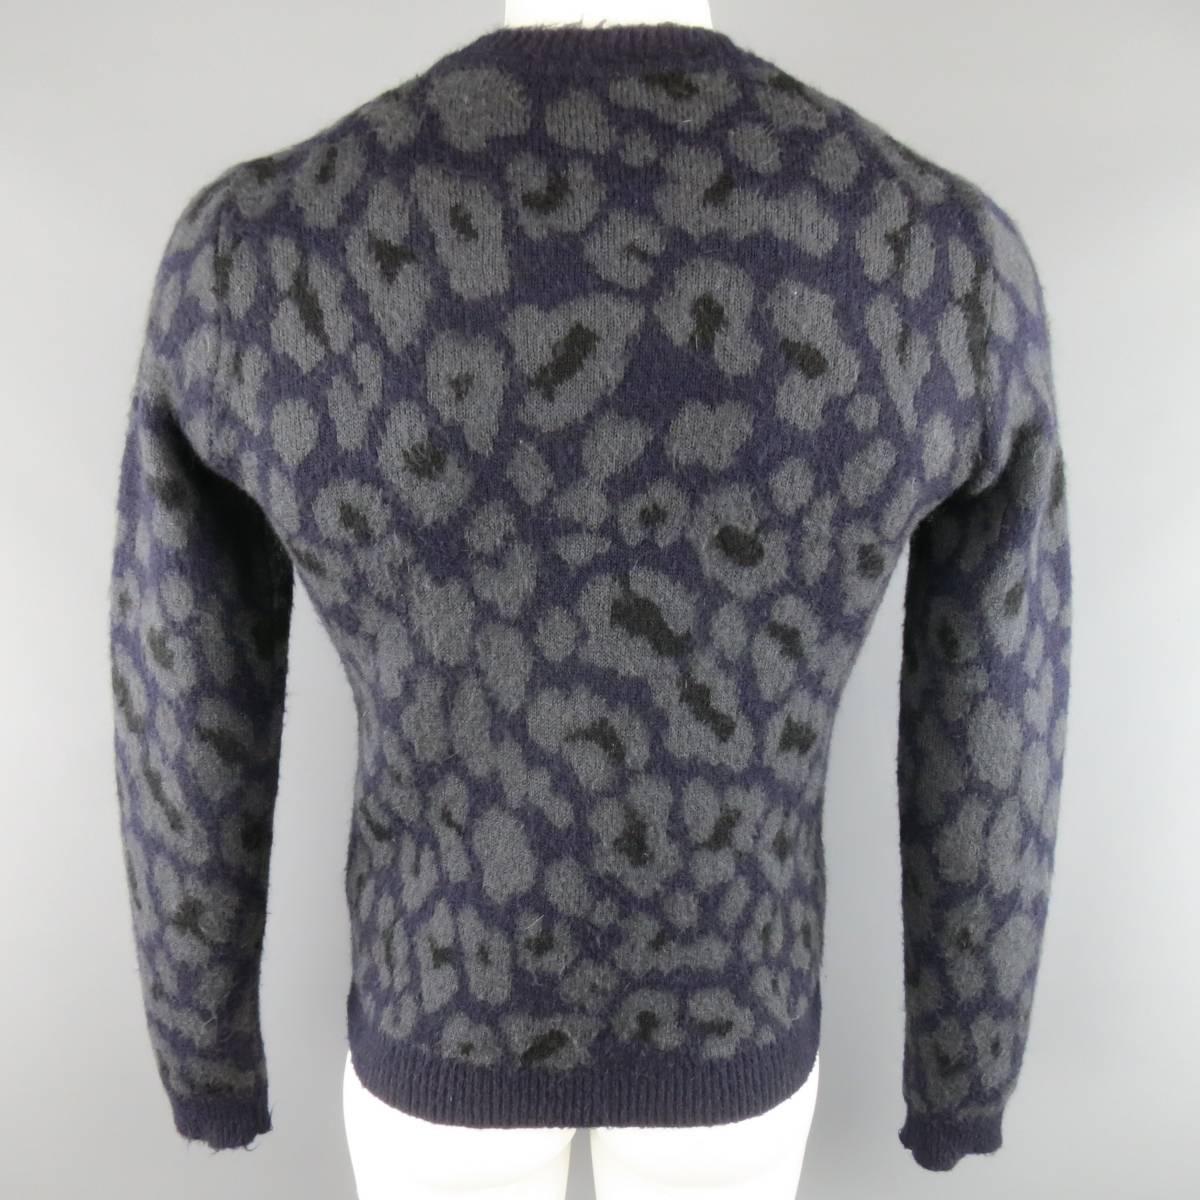 Black RAF SIMONS Size S Navy & Grey Cheetah Print Mohair Blend Pullover Sweater